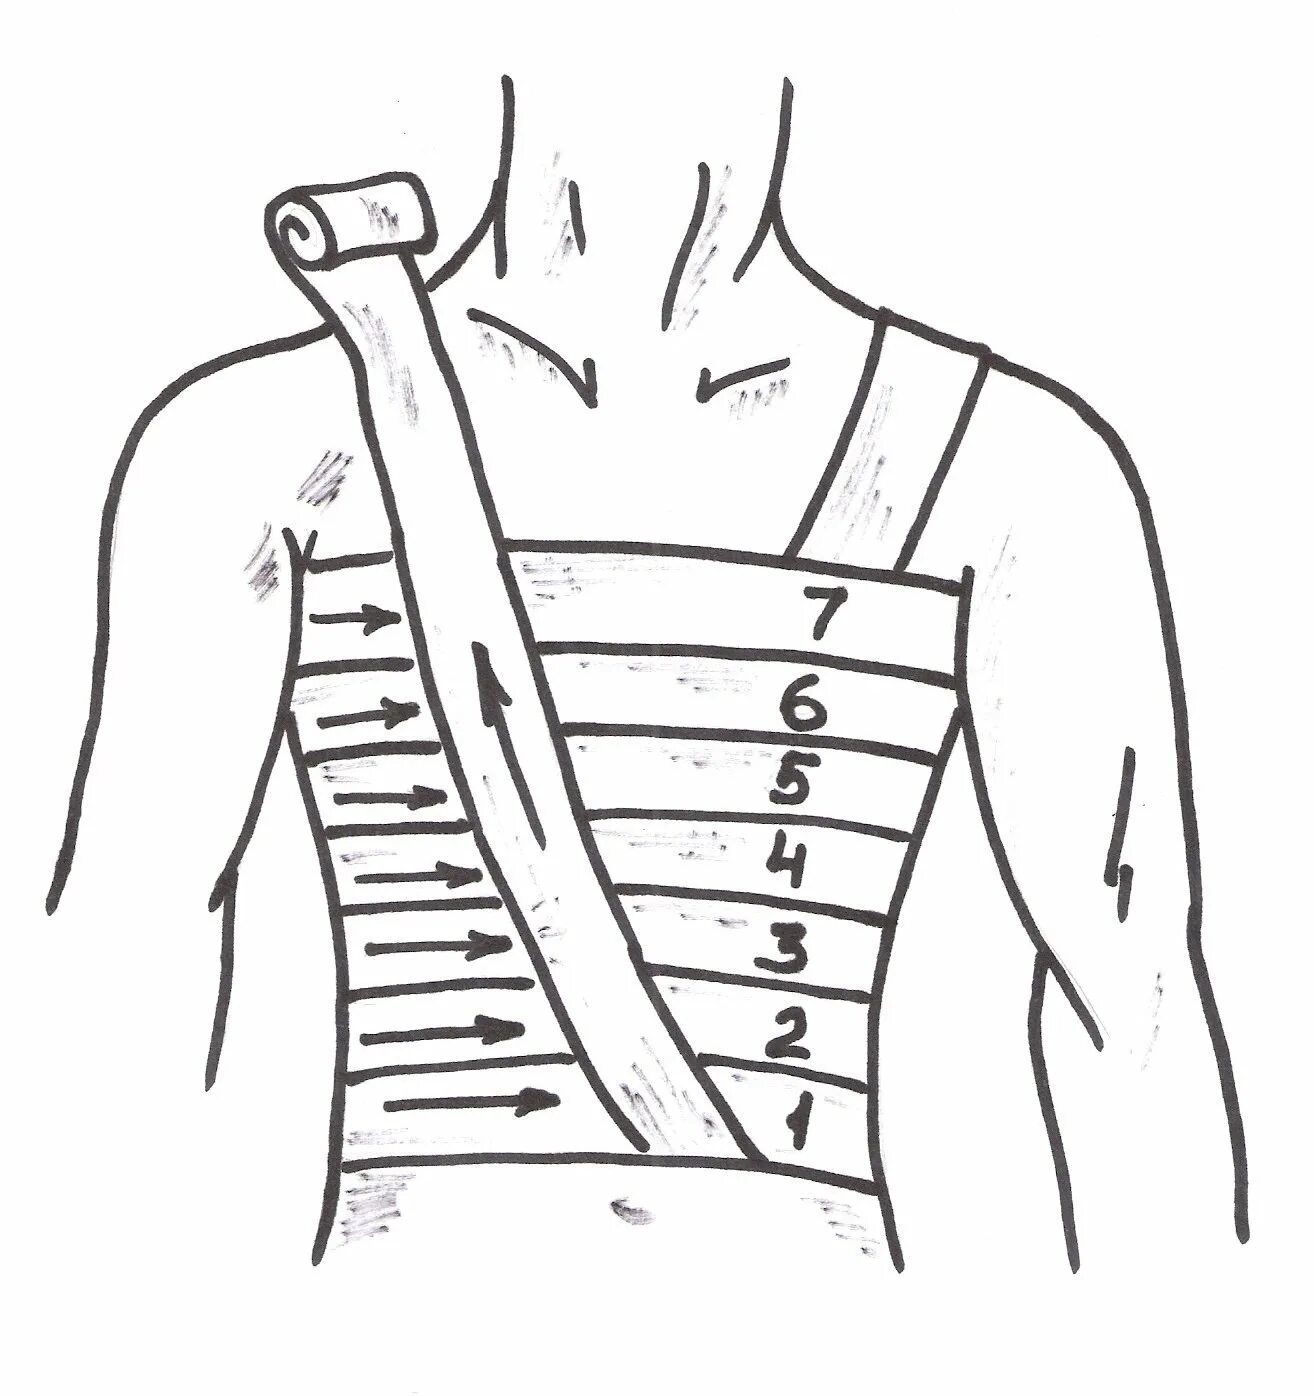 Повязка на грудную клетку алгоритм. Десмургия спиральная повязка на грудную клетку. Наложение спиральной повязки на грудную клетку. Спиралевидная повязка на грудную клетку алгоритм. Спиральная повязка при переломе ребер.